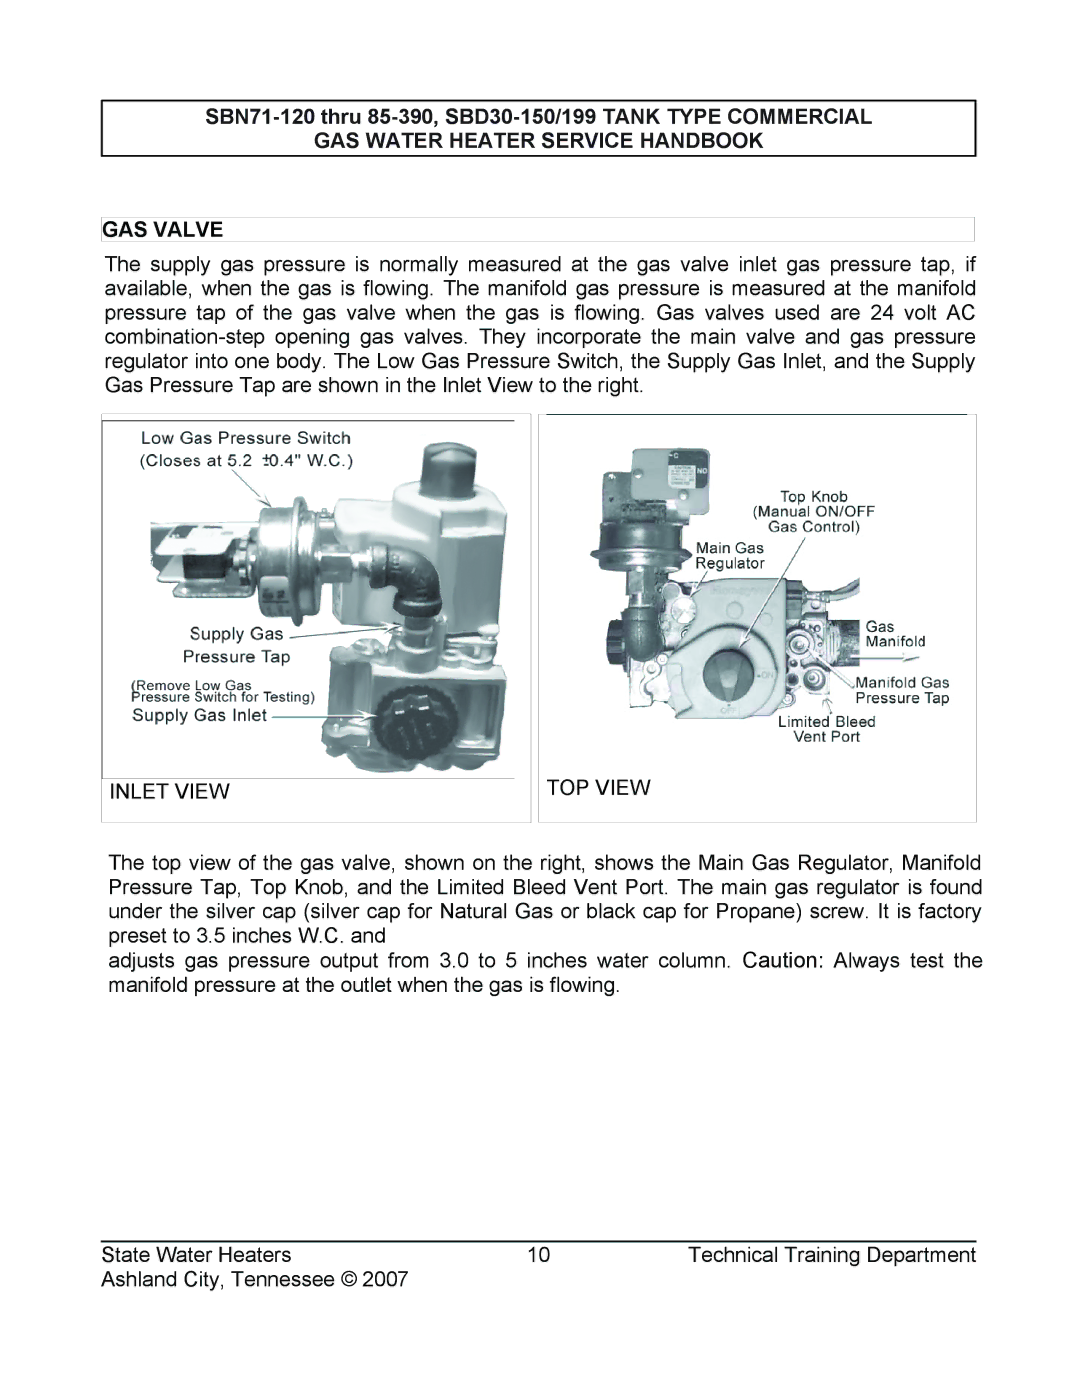 State Industries SBN85 390 (A), SBD30 150, SBN71 120 manual GAS Water Heater Service Handbook GAS Valve, Inlet View TOP View 